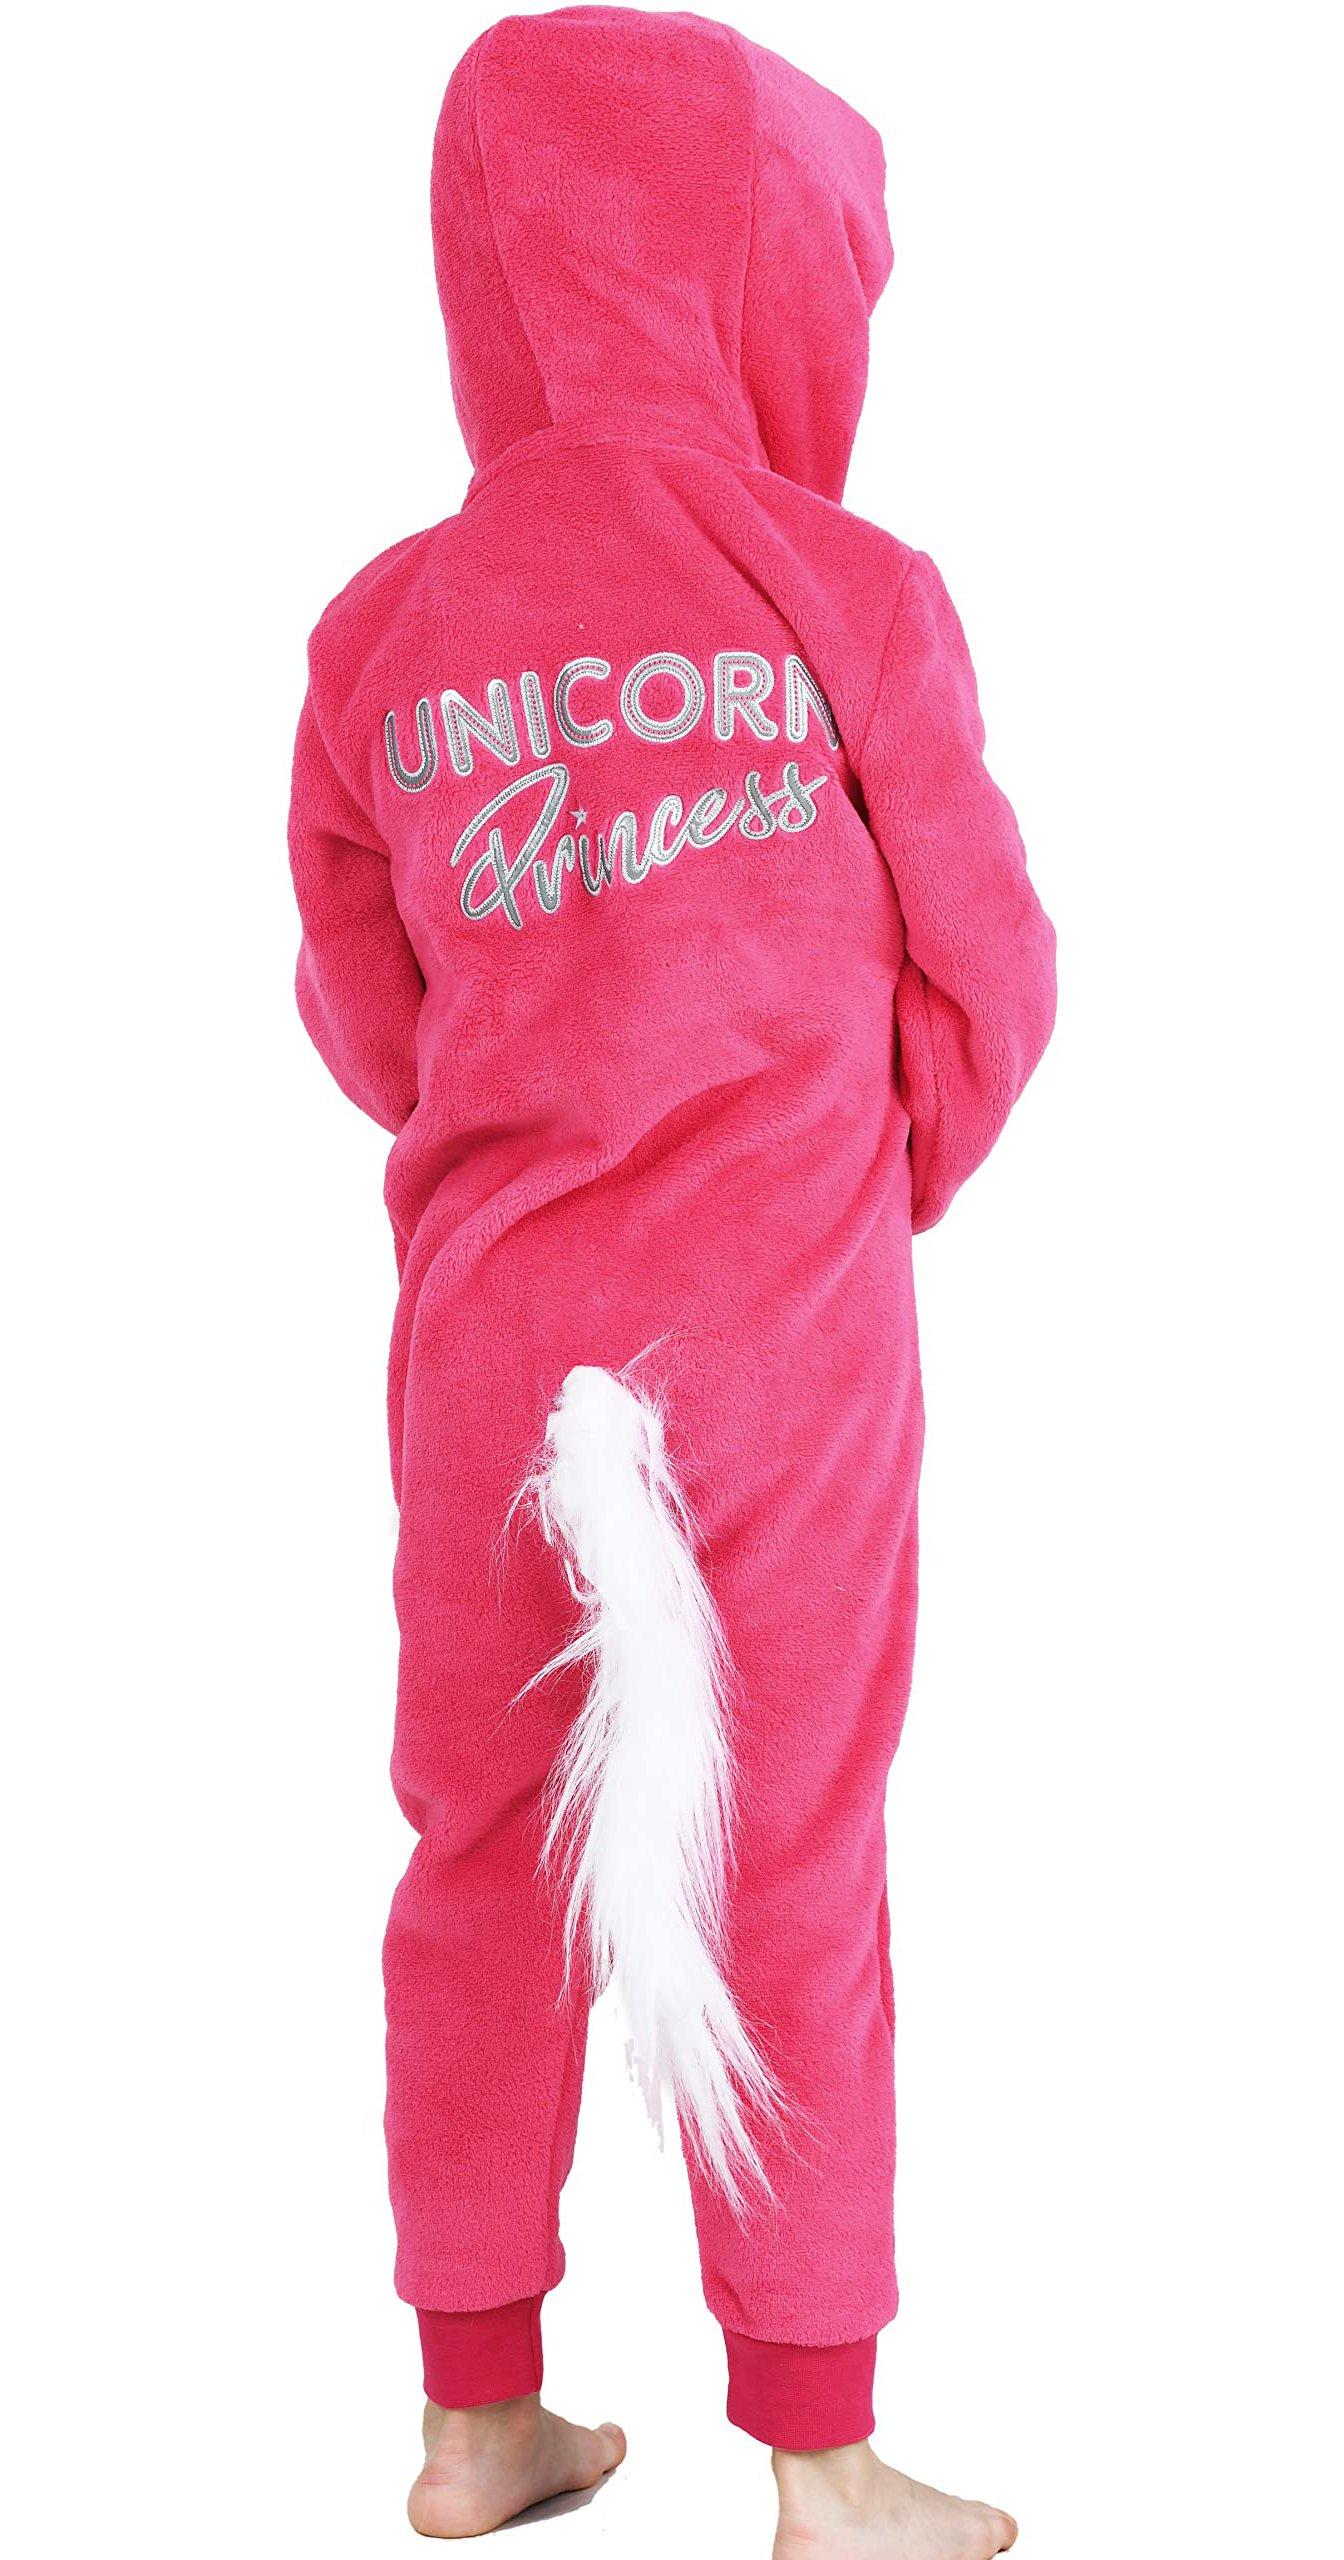 Super Soft Fleece Unicorn Onesie Playsuit with Tail